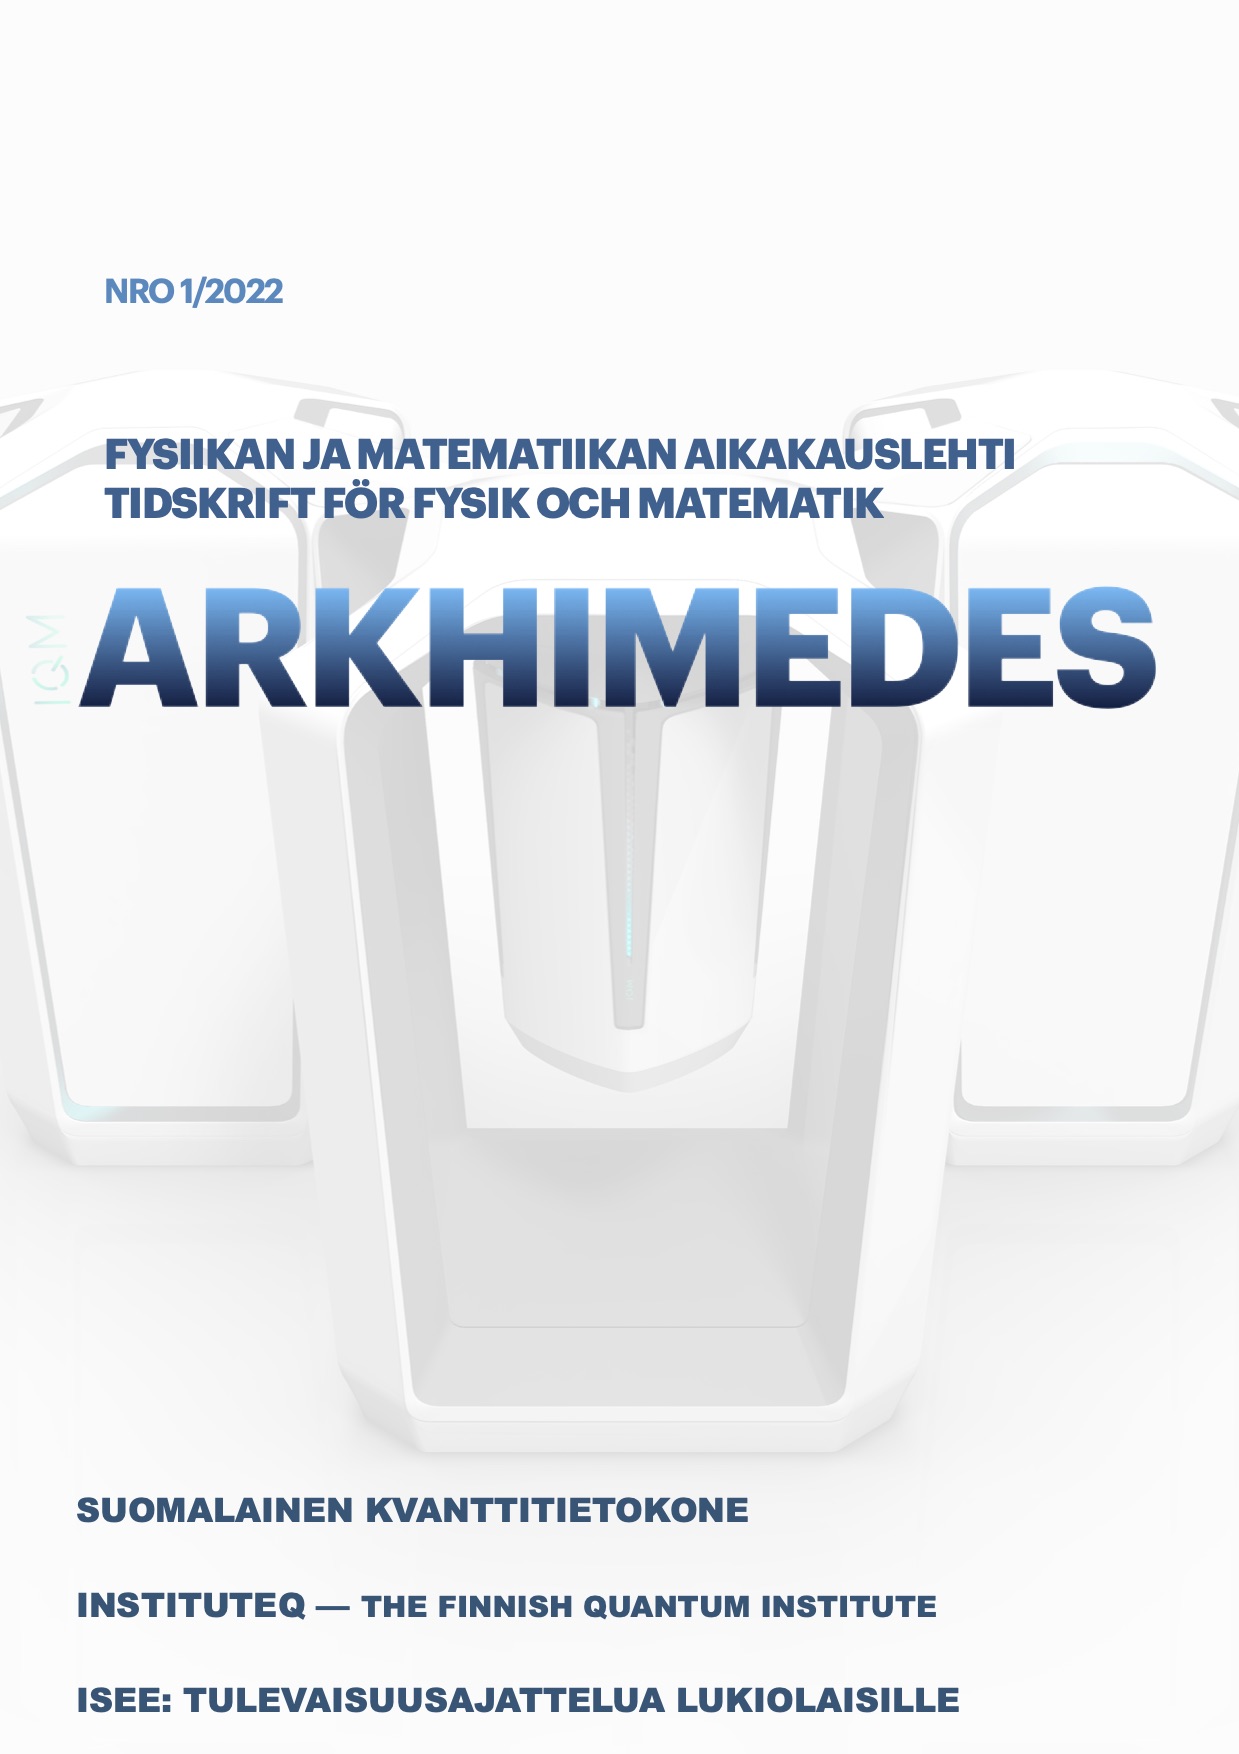 					Näytä Nro 1 (2022): Arkhimedes
				